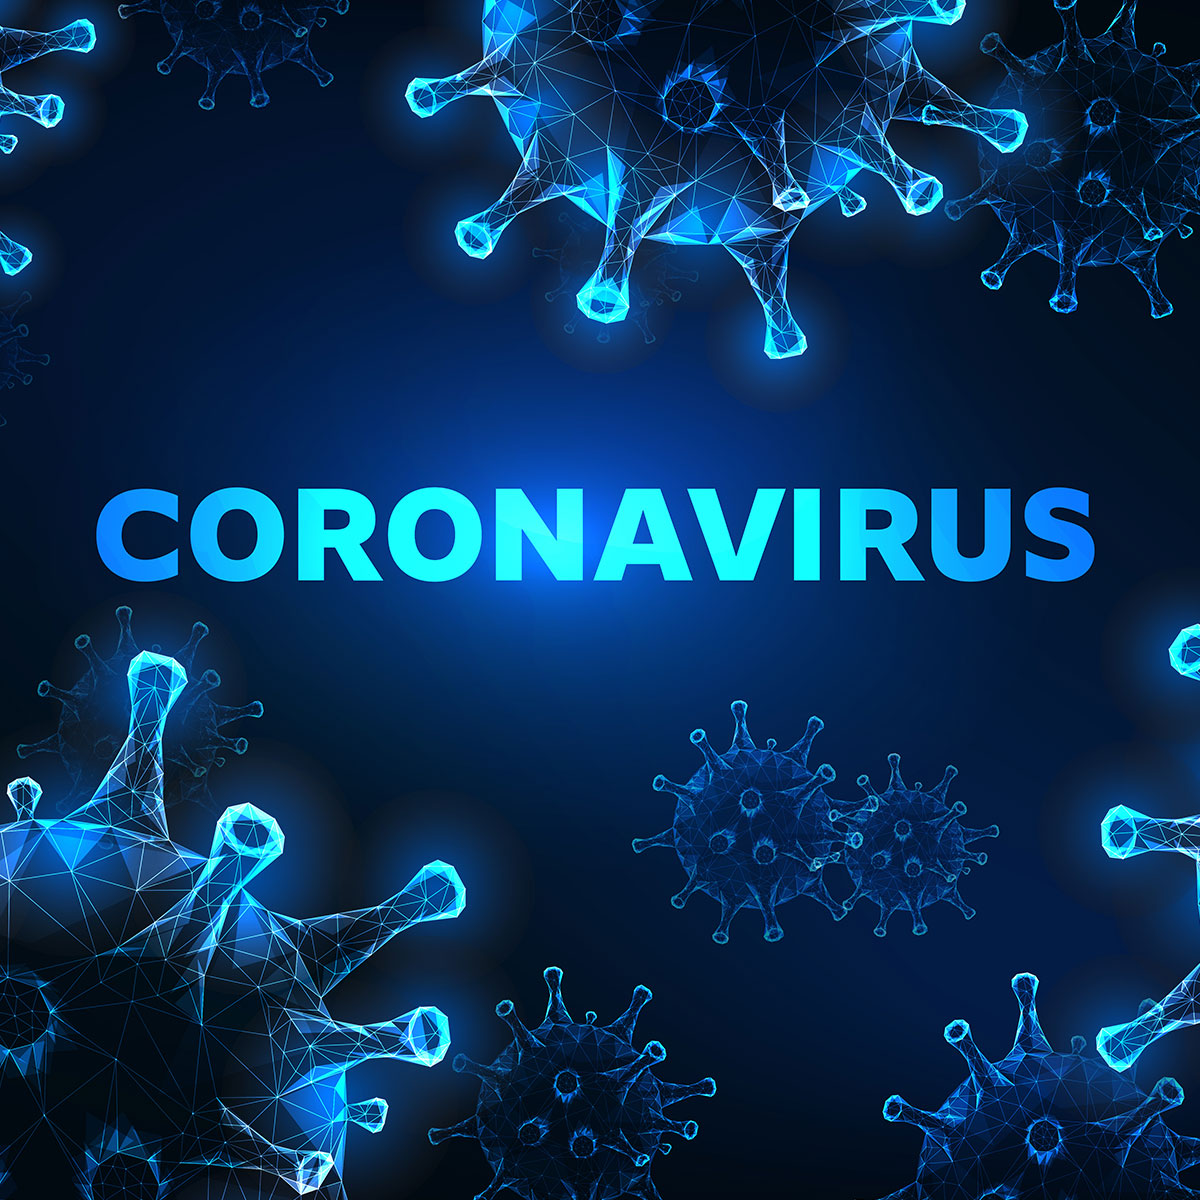 https://www.jdrf.org/wp-content/uploads/2020/03/JDRF_Coronavirus-2_Square_1200x1200.jpg